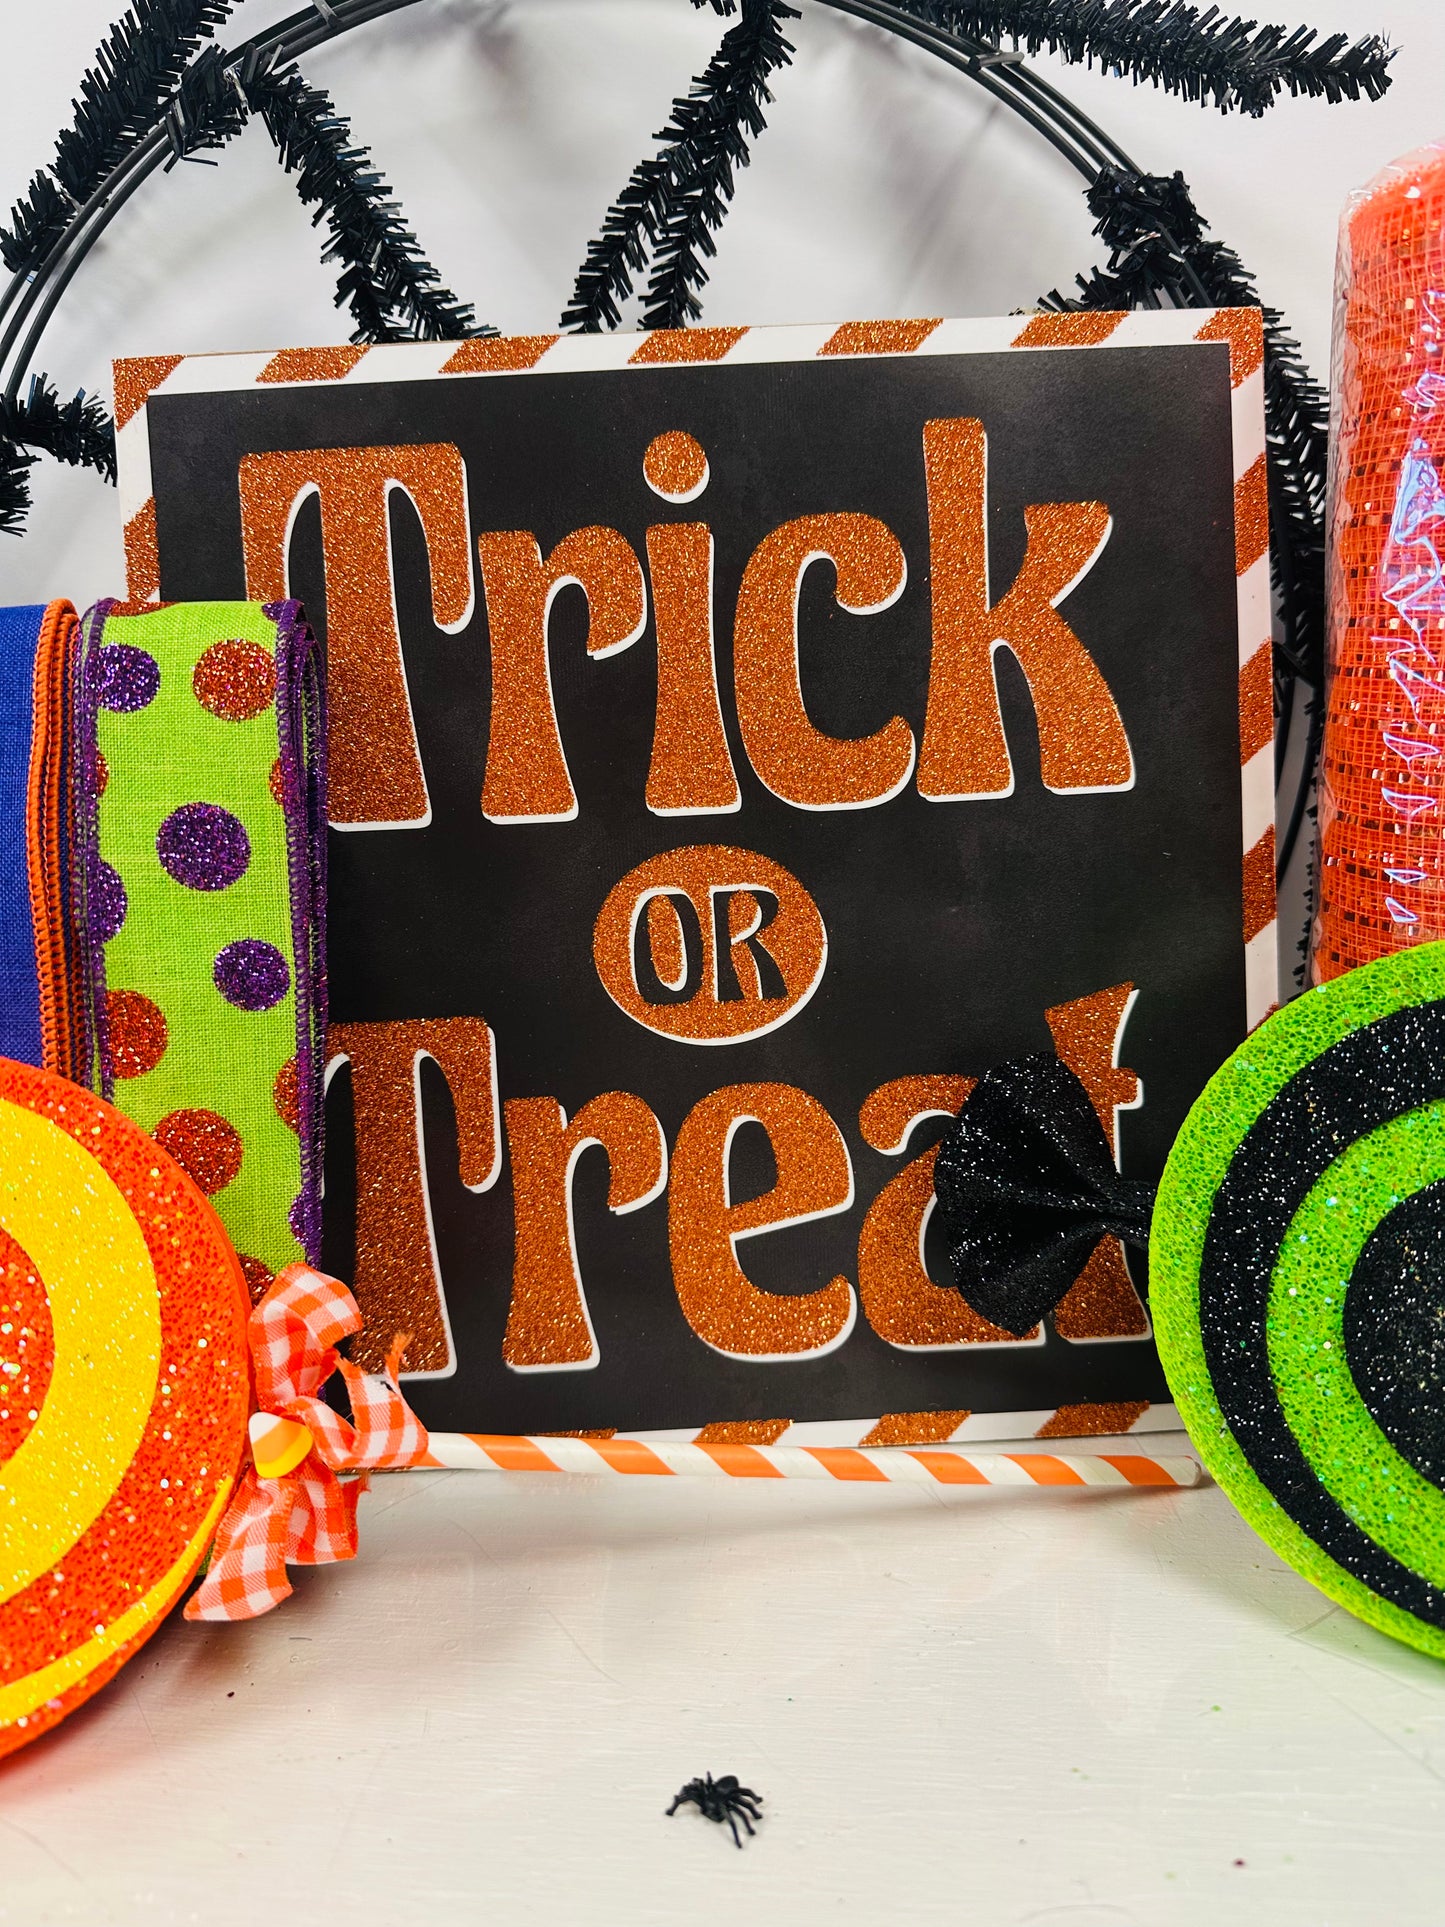 Wreath Kit - Trick or Treat Halloween DIY Wreath Kit